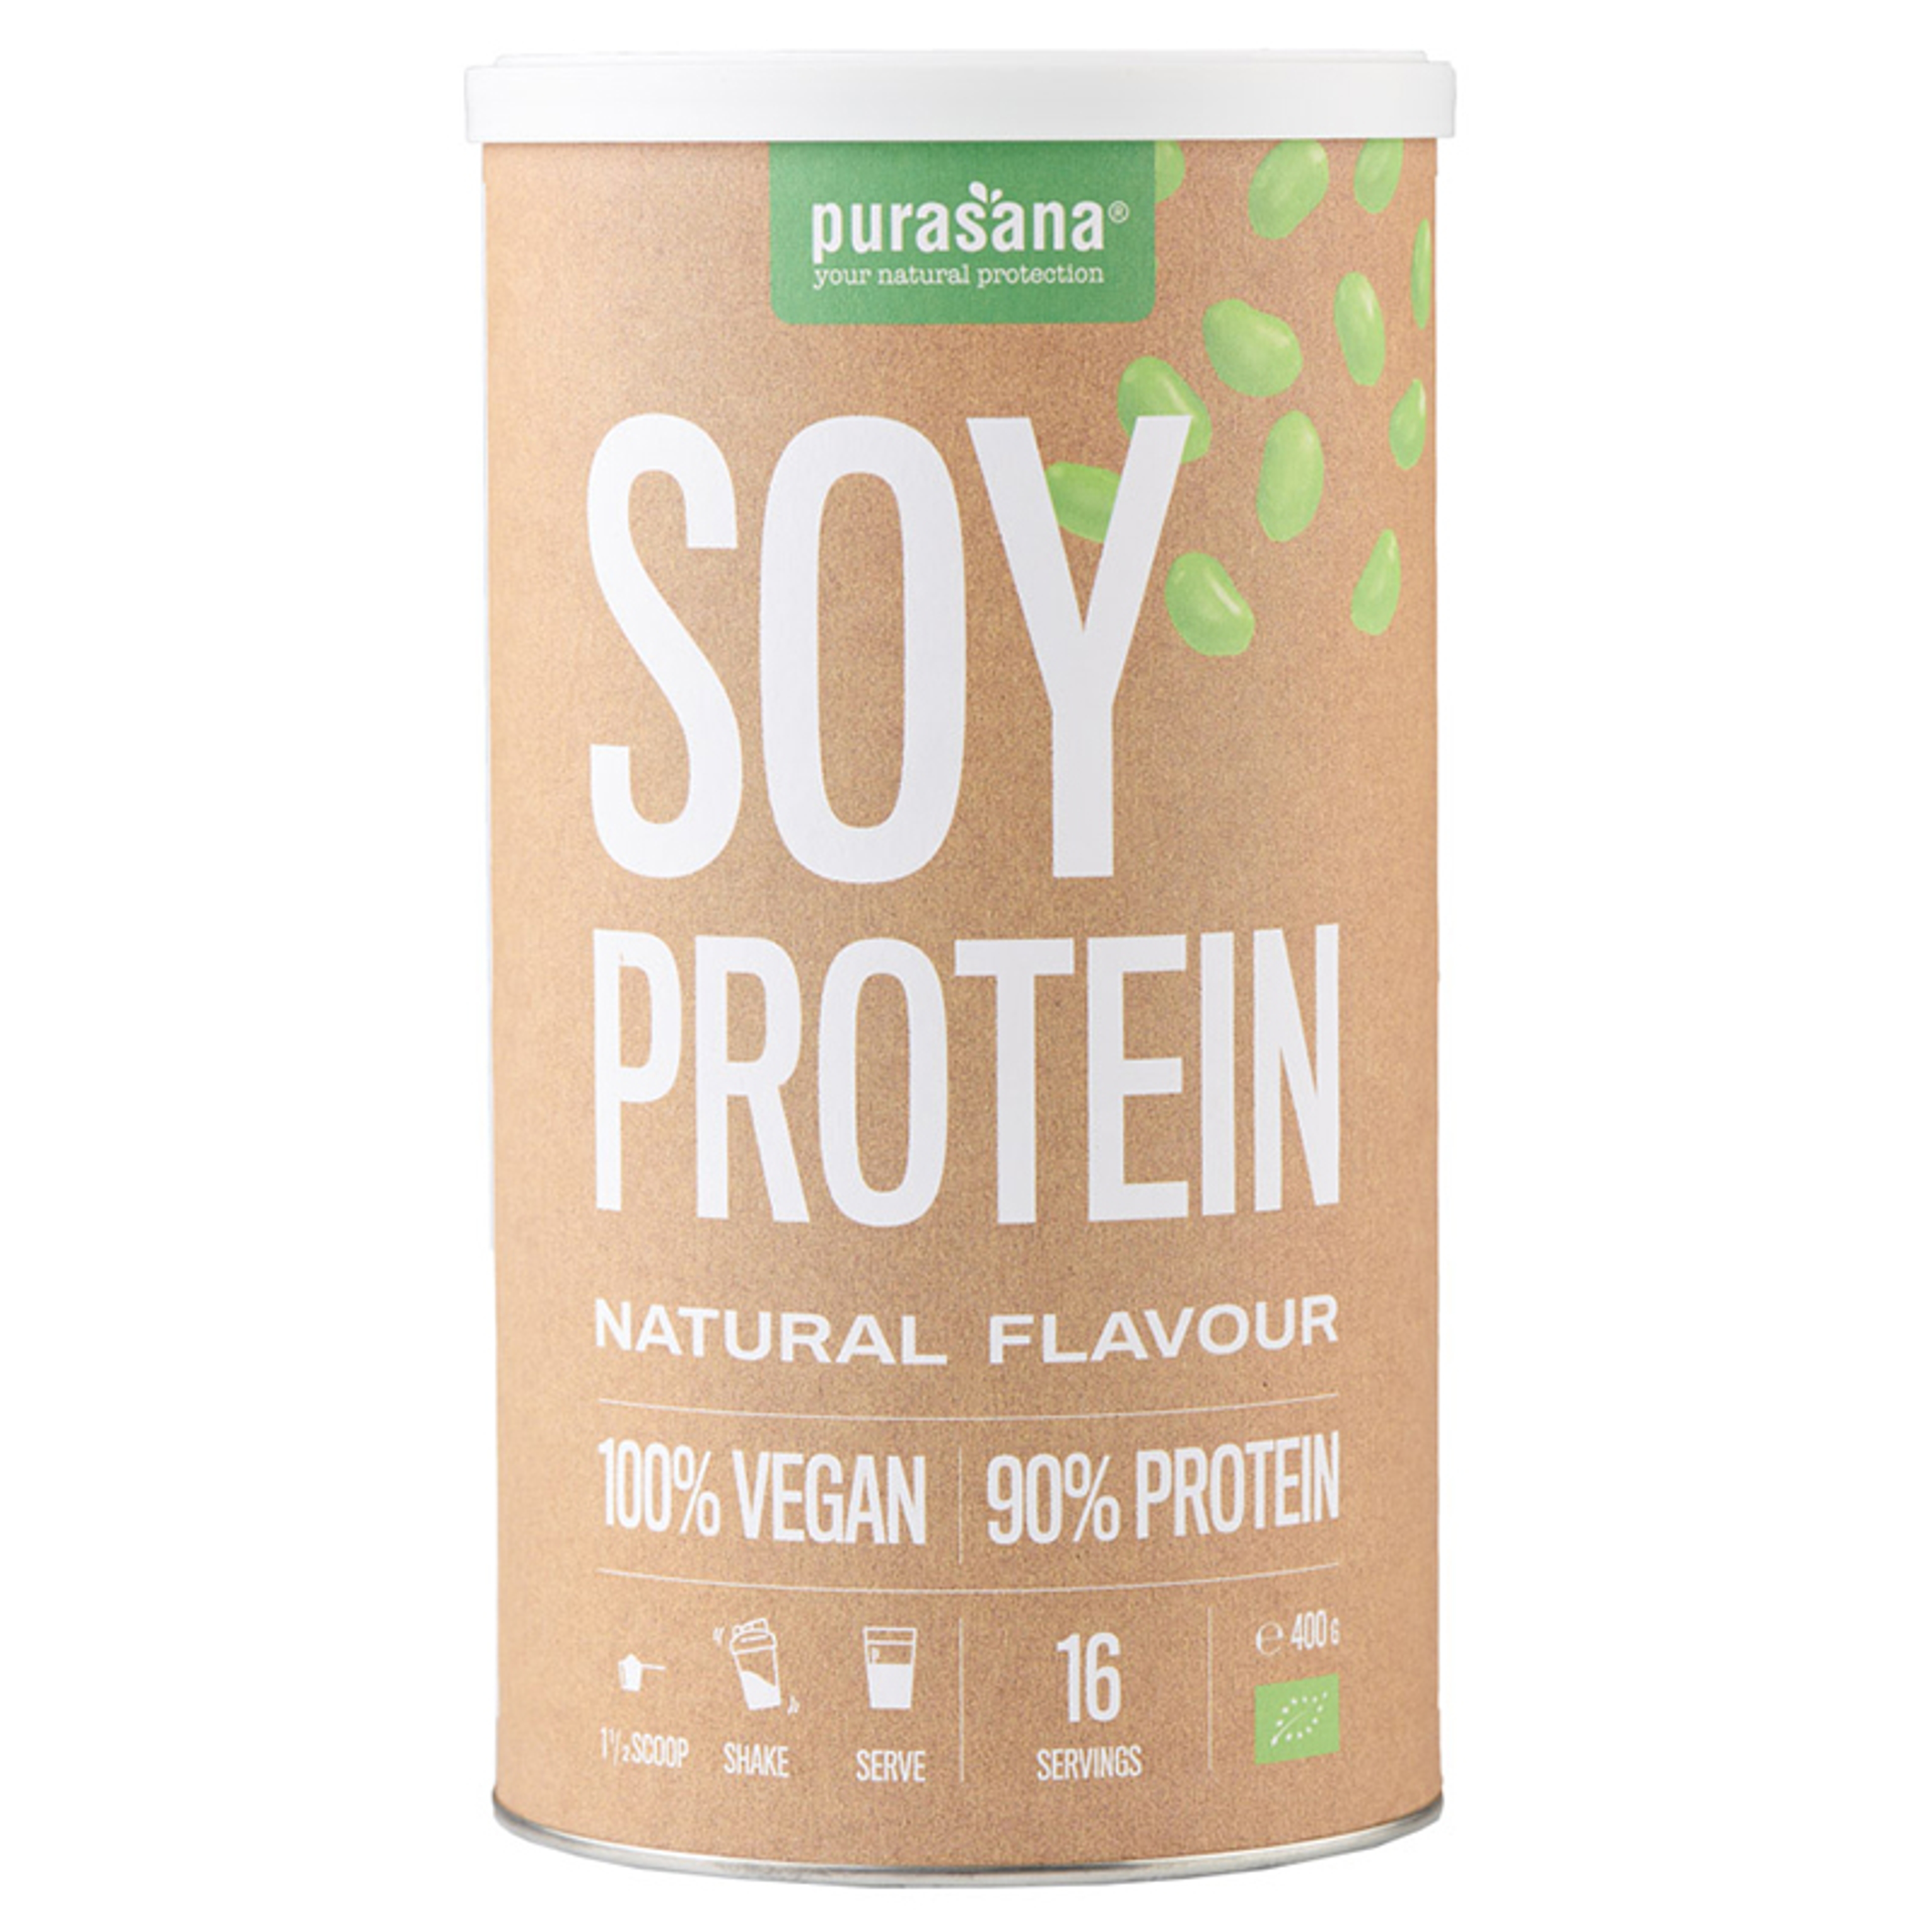 Purasana_Soy-Protein-Natural-Flavour.jpg